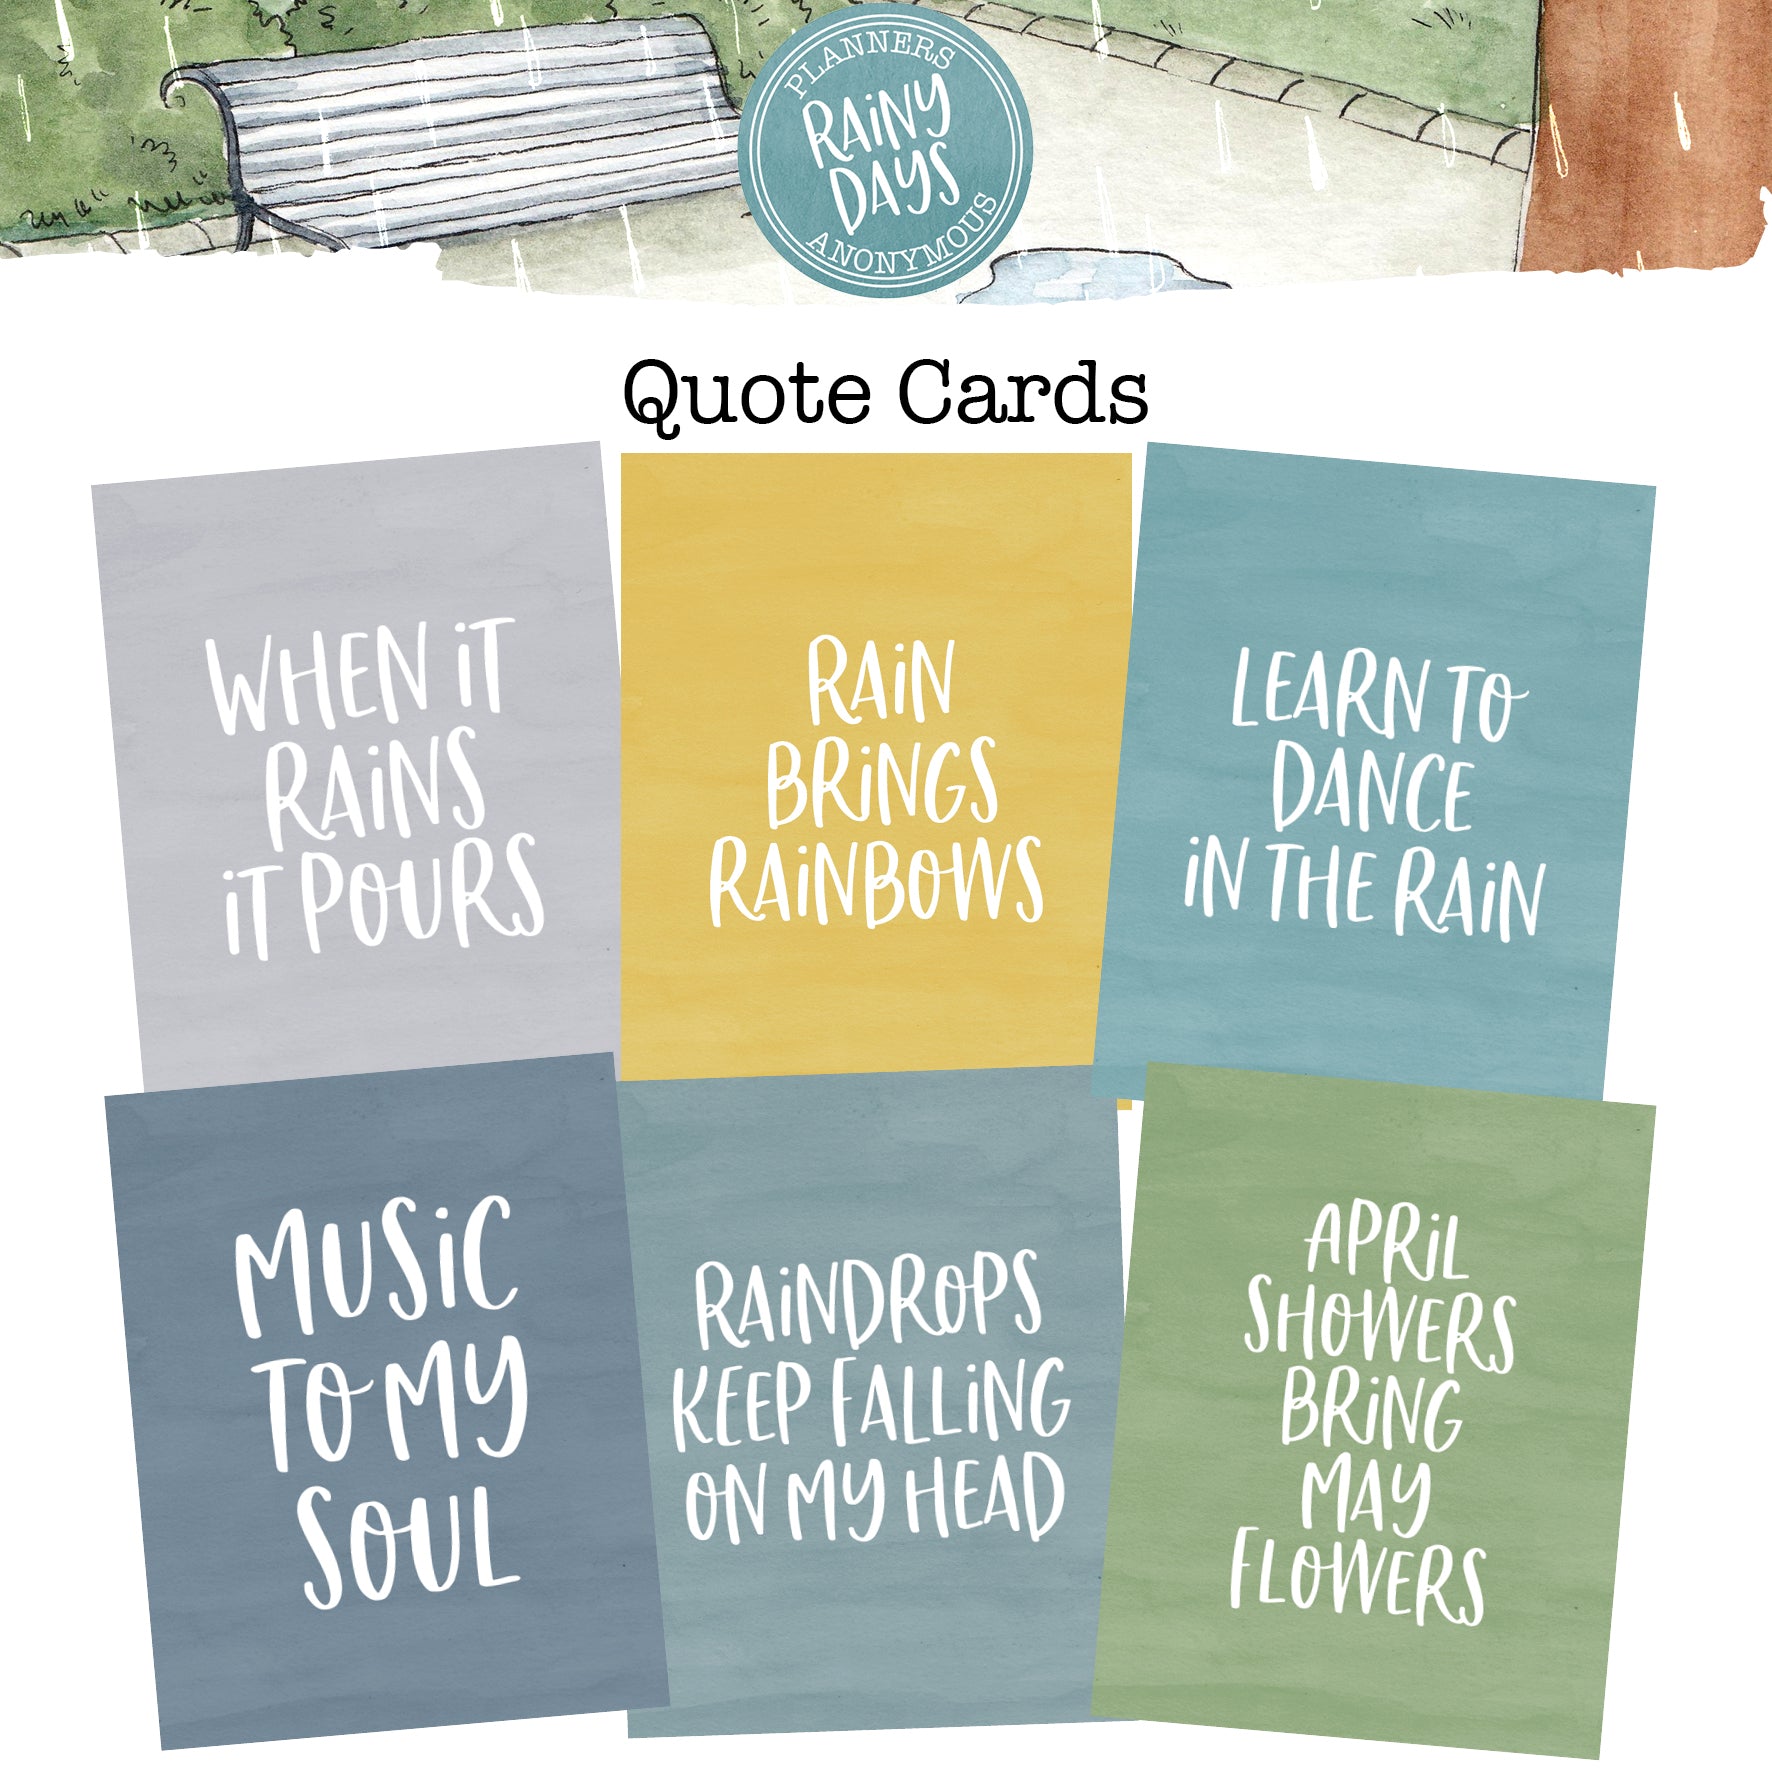 Rainy Days Quote Cards